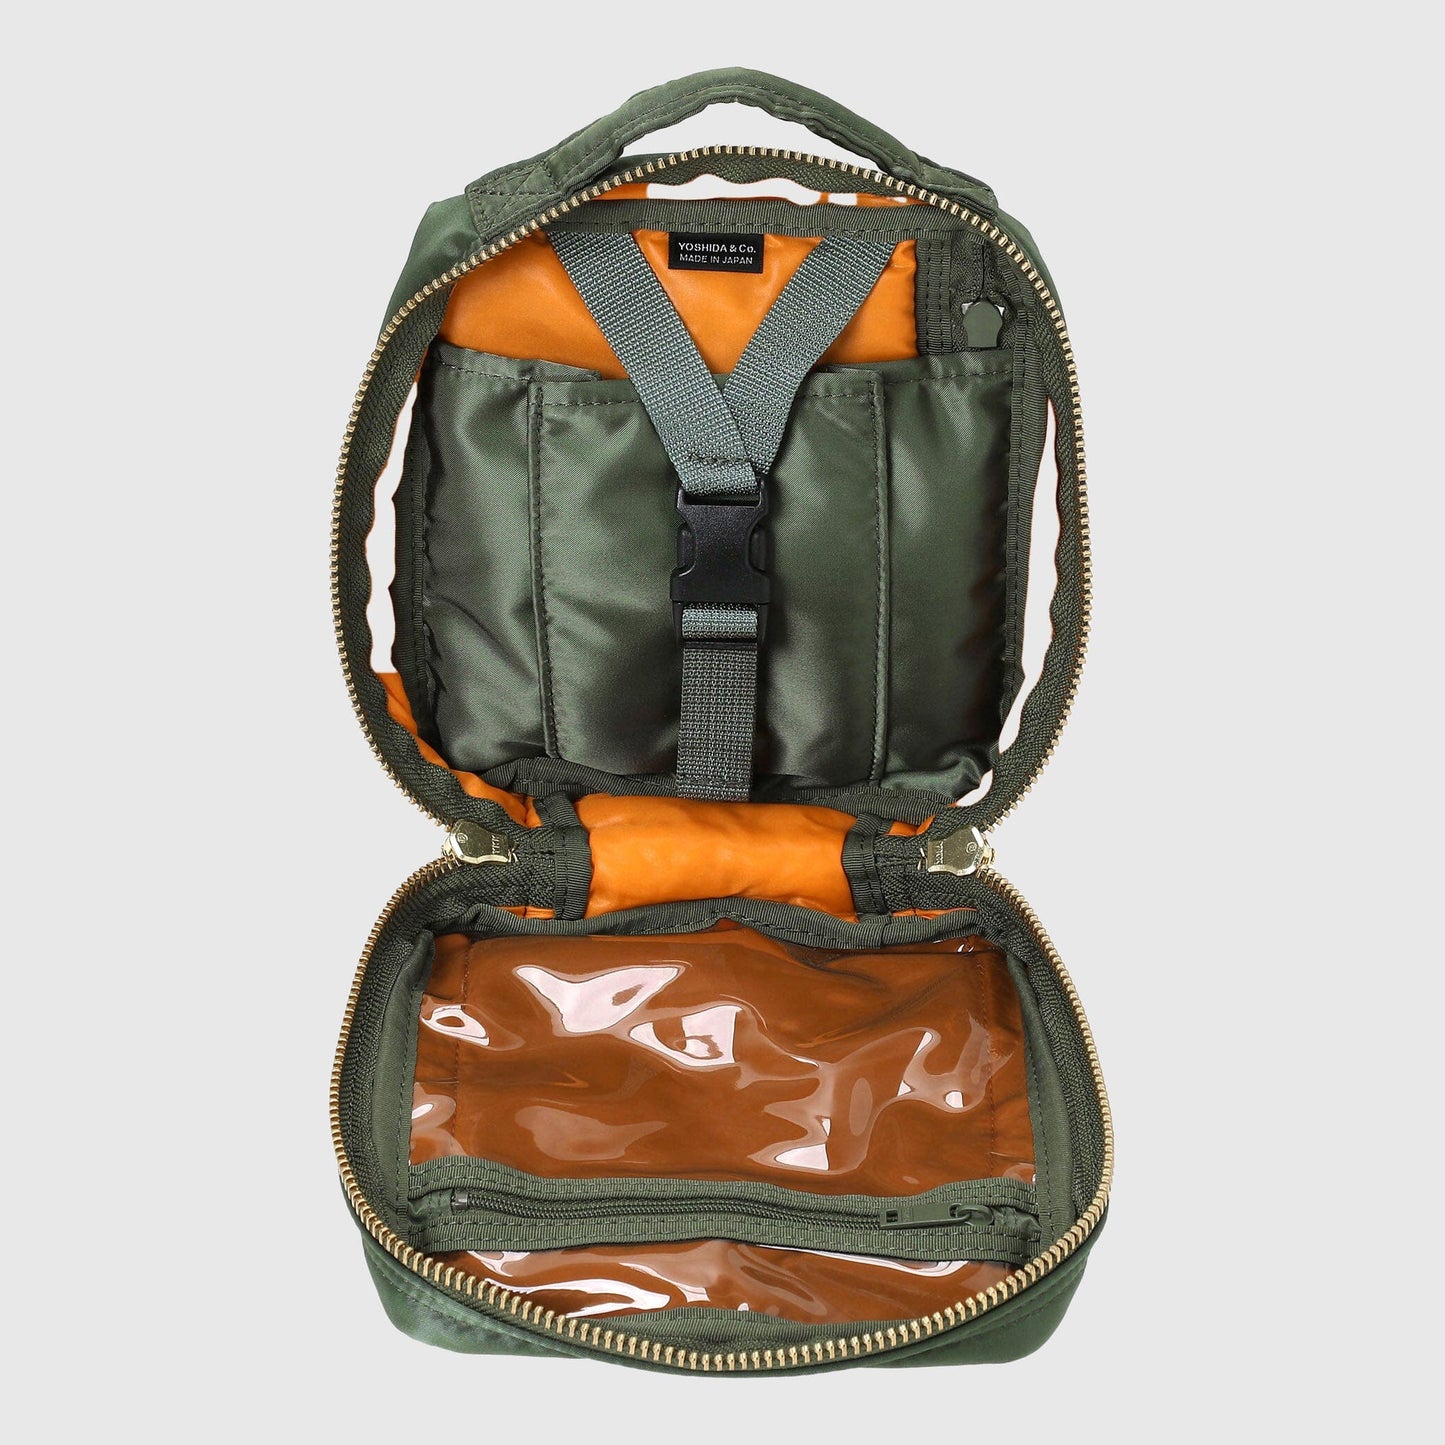 Porter-Yoshida & Co. Tanker Shoulder Bag - Sage Green Bag Porter-Yoshida & Co. 